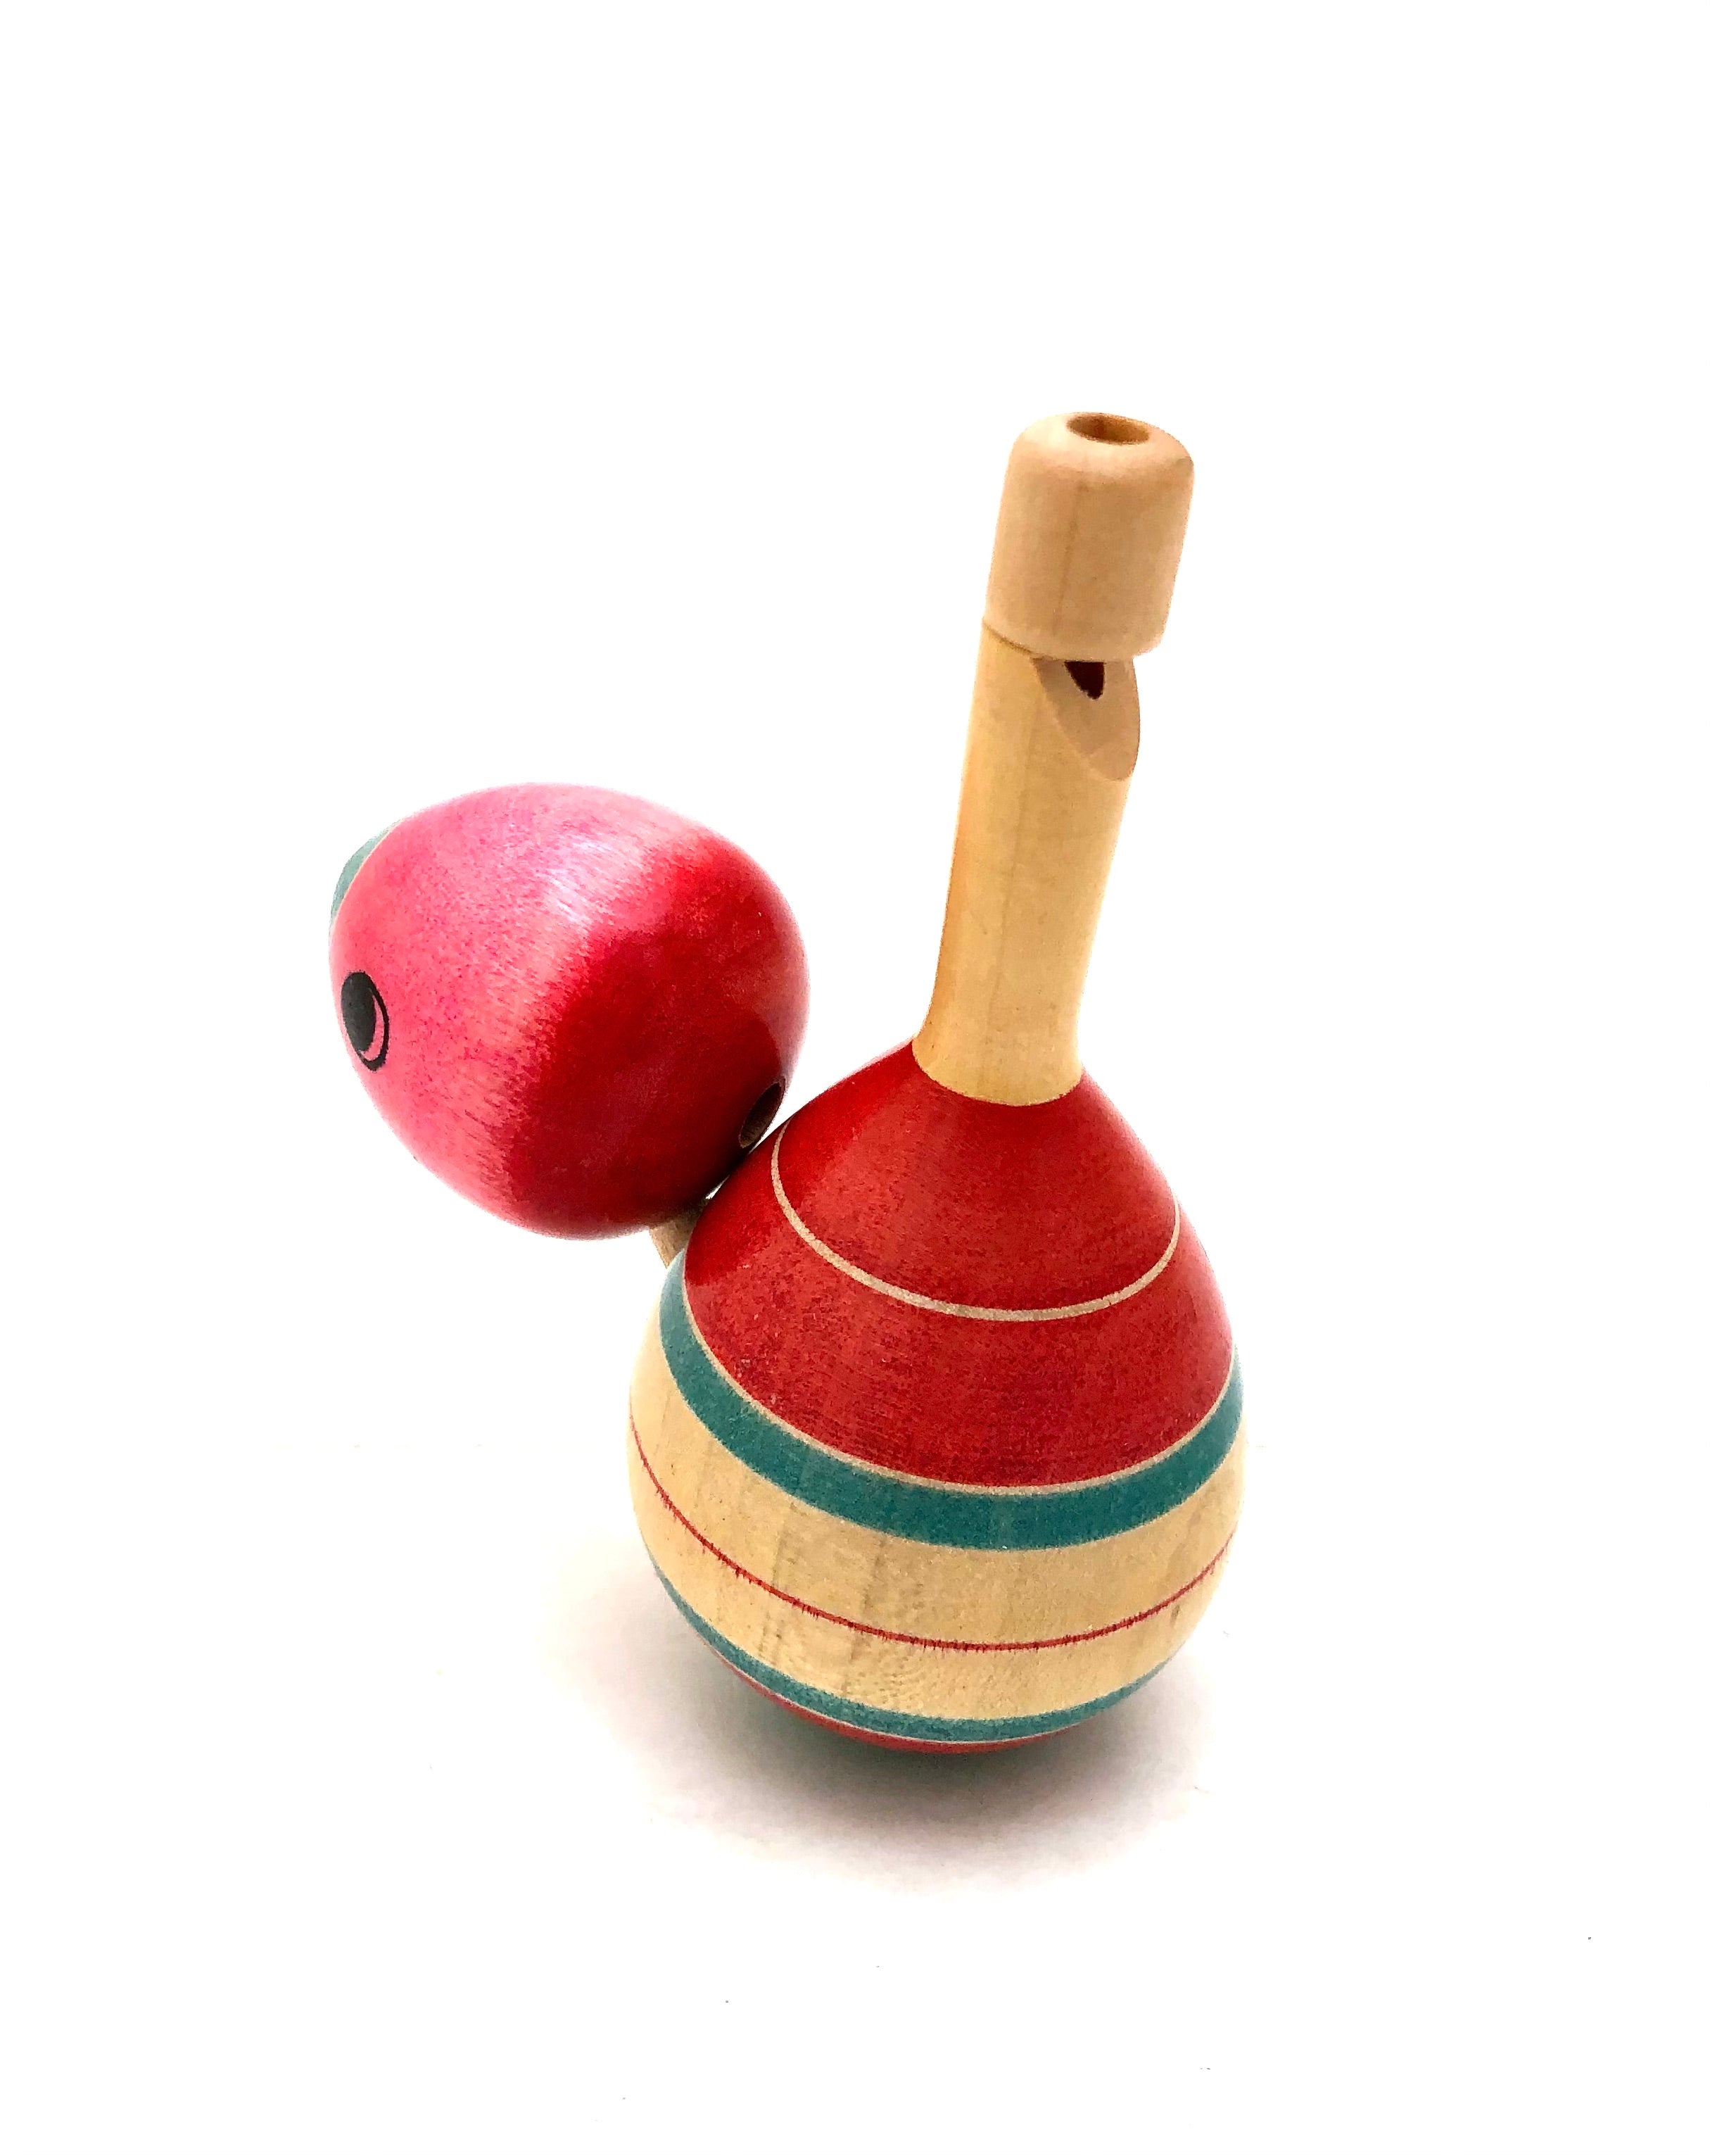 Vintage Japanese Wooden Folk Bird Whistle Toy